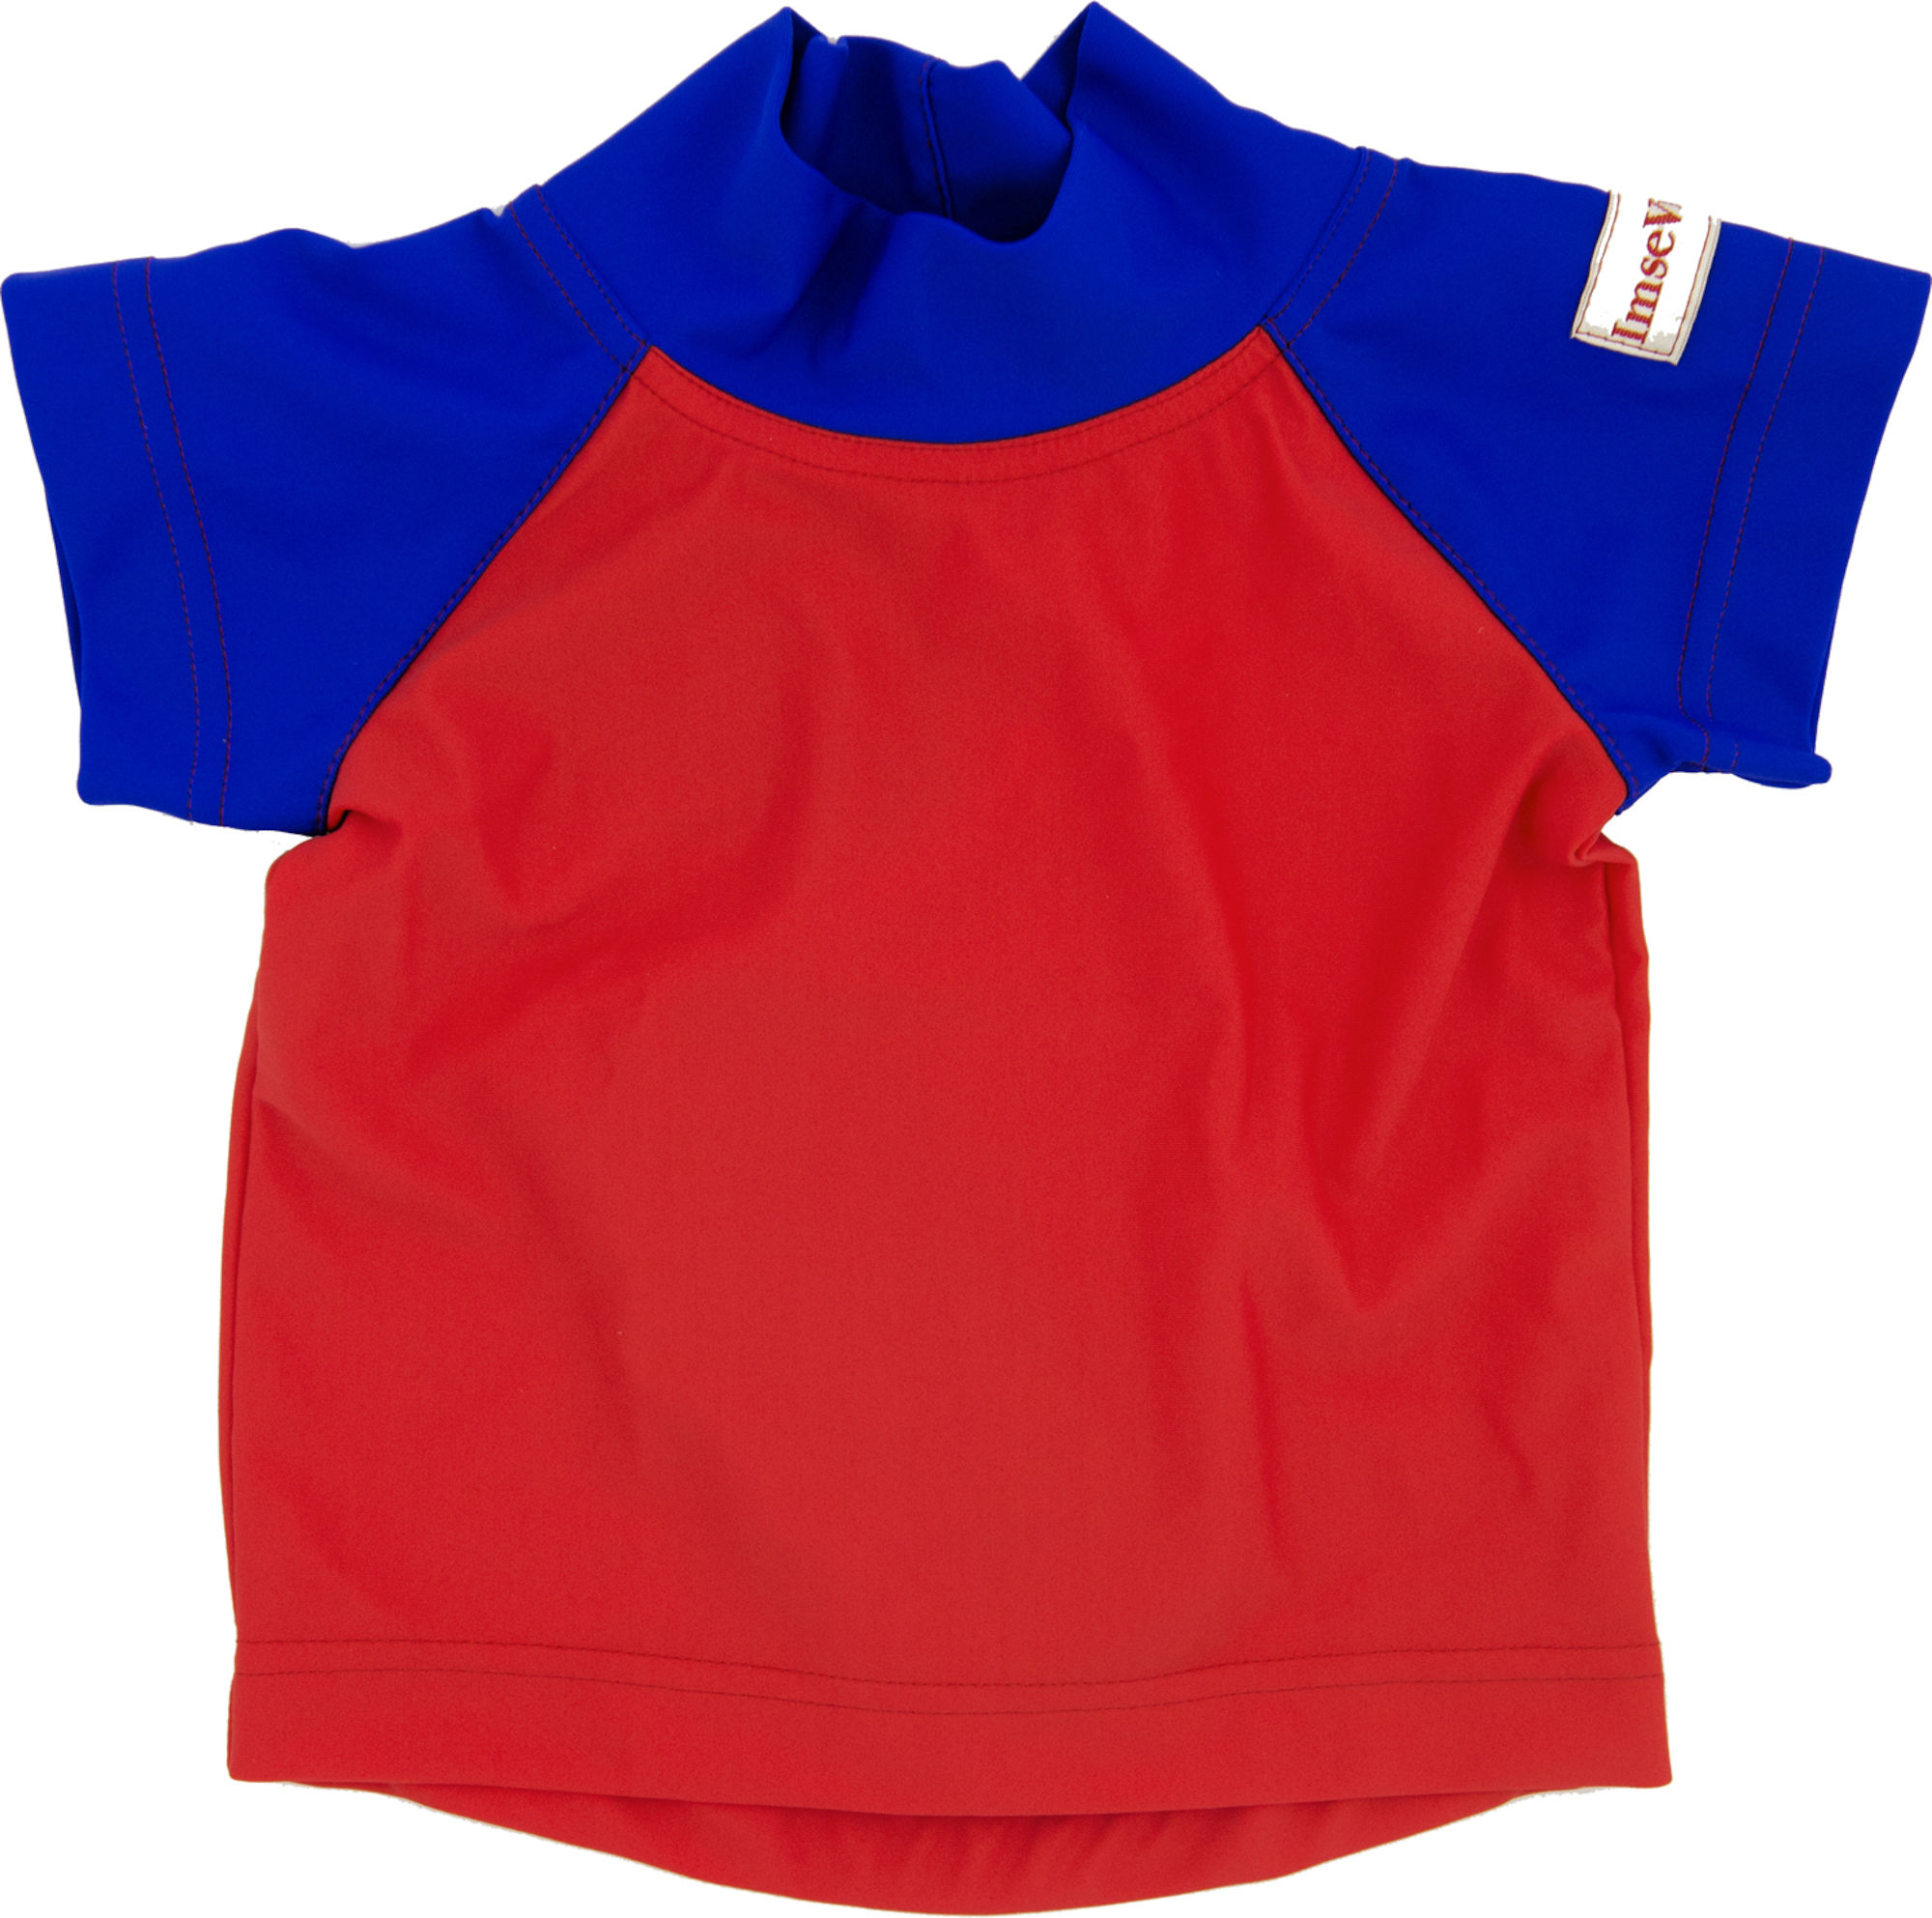 ImseVimse UV T-shirt Red/blue 74-80